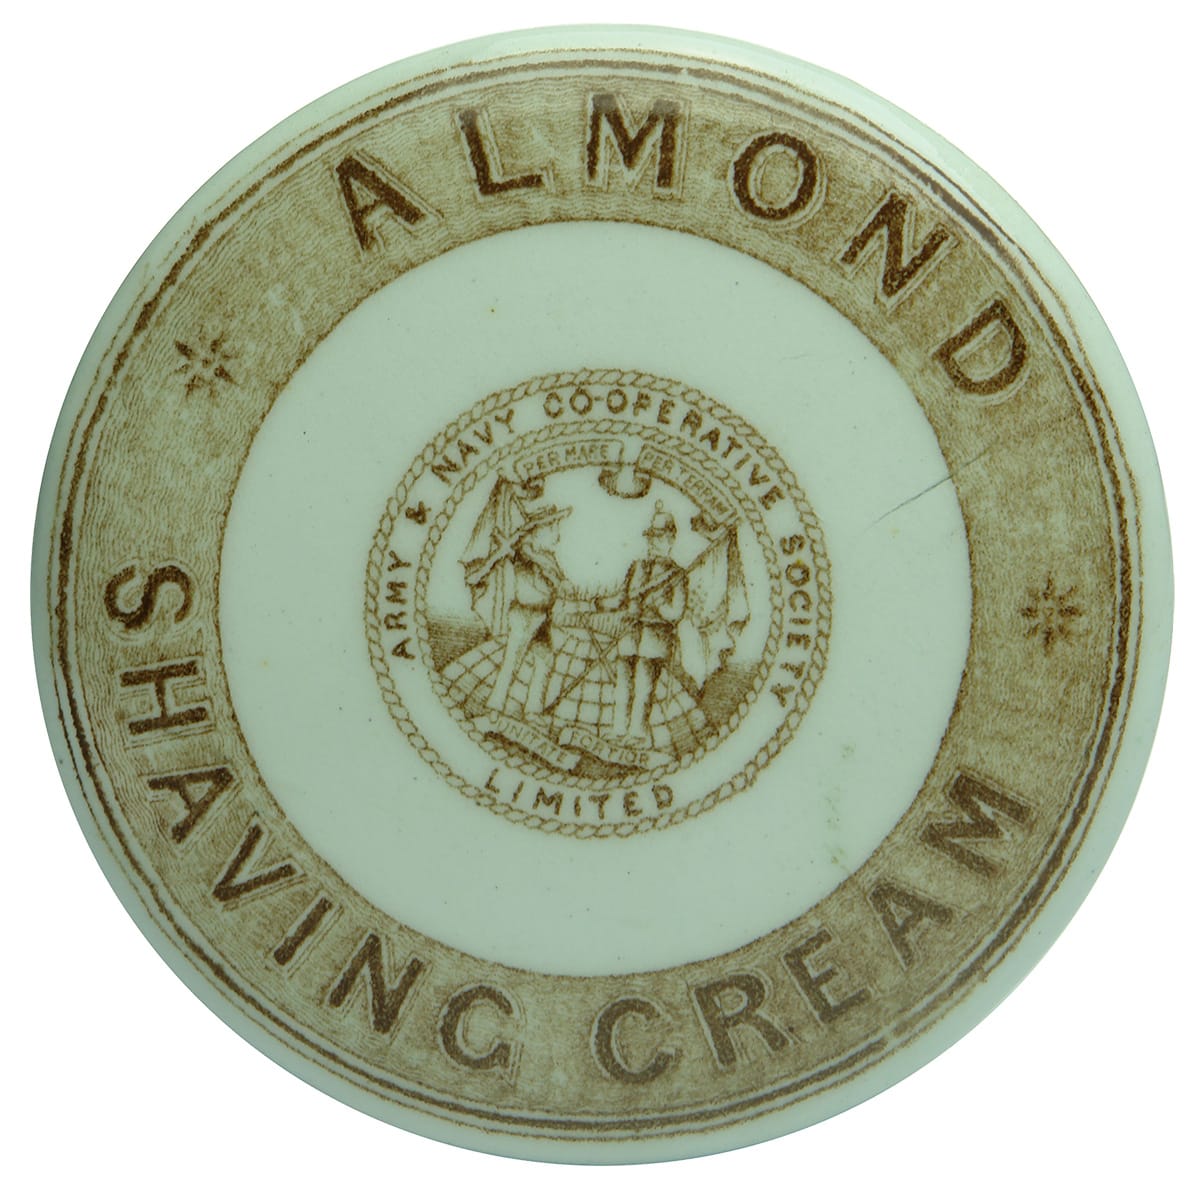 Army Navy Cooperative Almond Shaving Cream Pot Lid